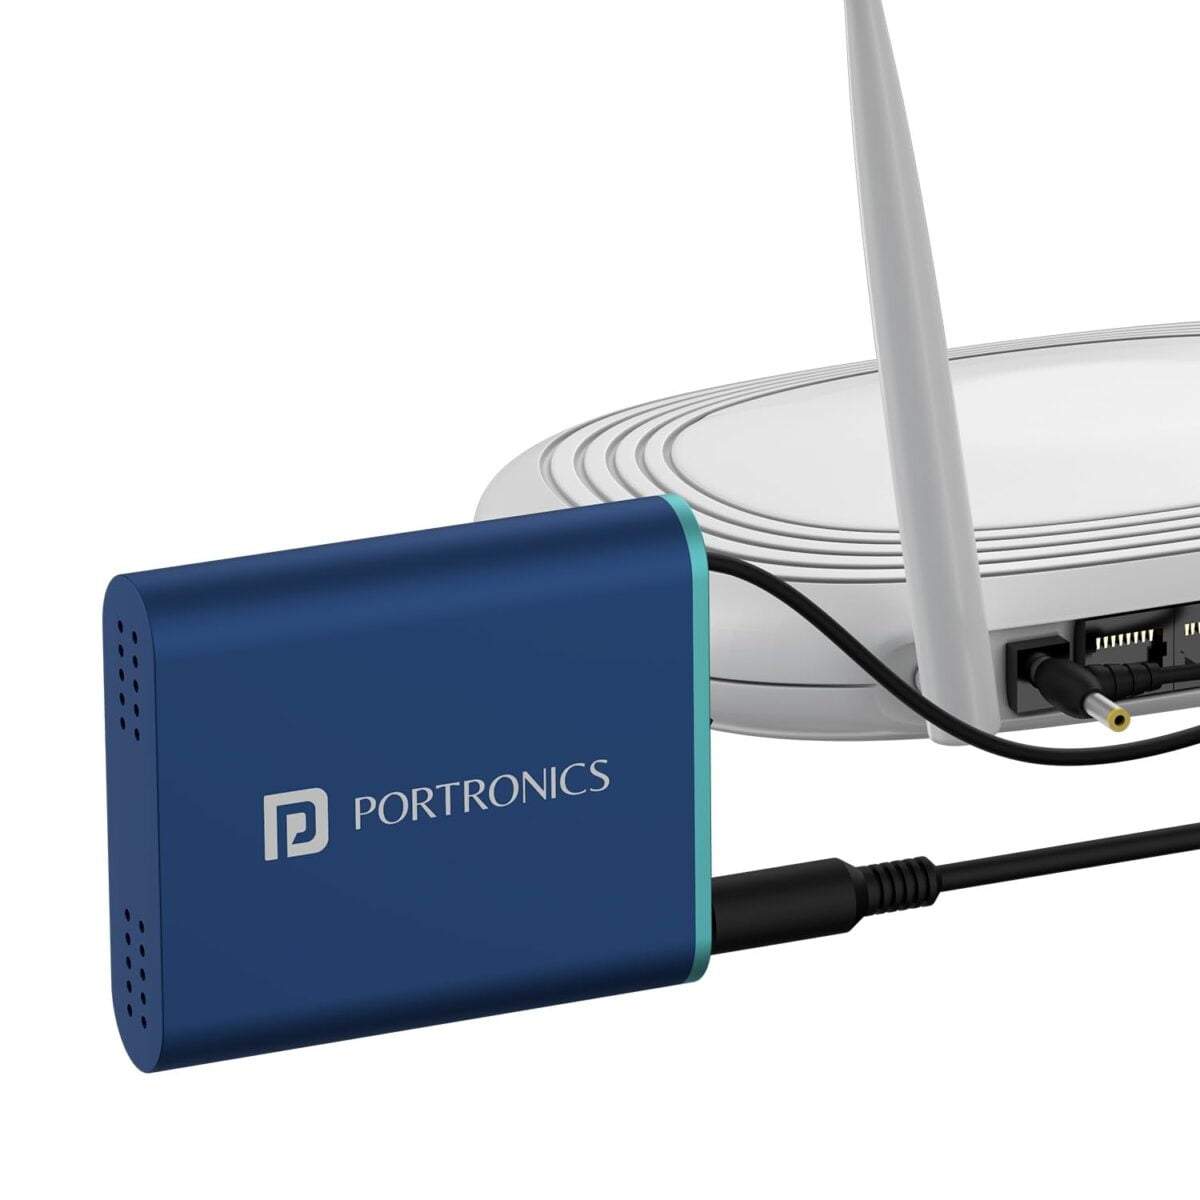 Portronics power plus advanced 2000 mah wifi router power bank